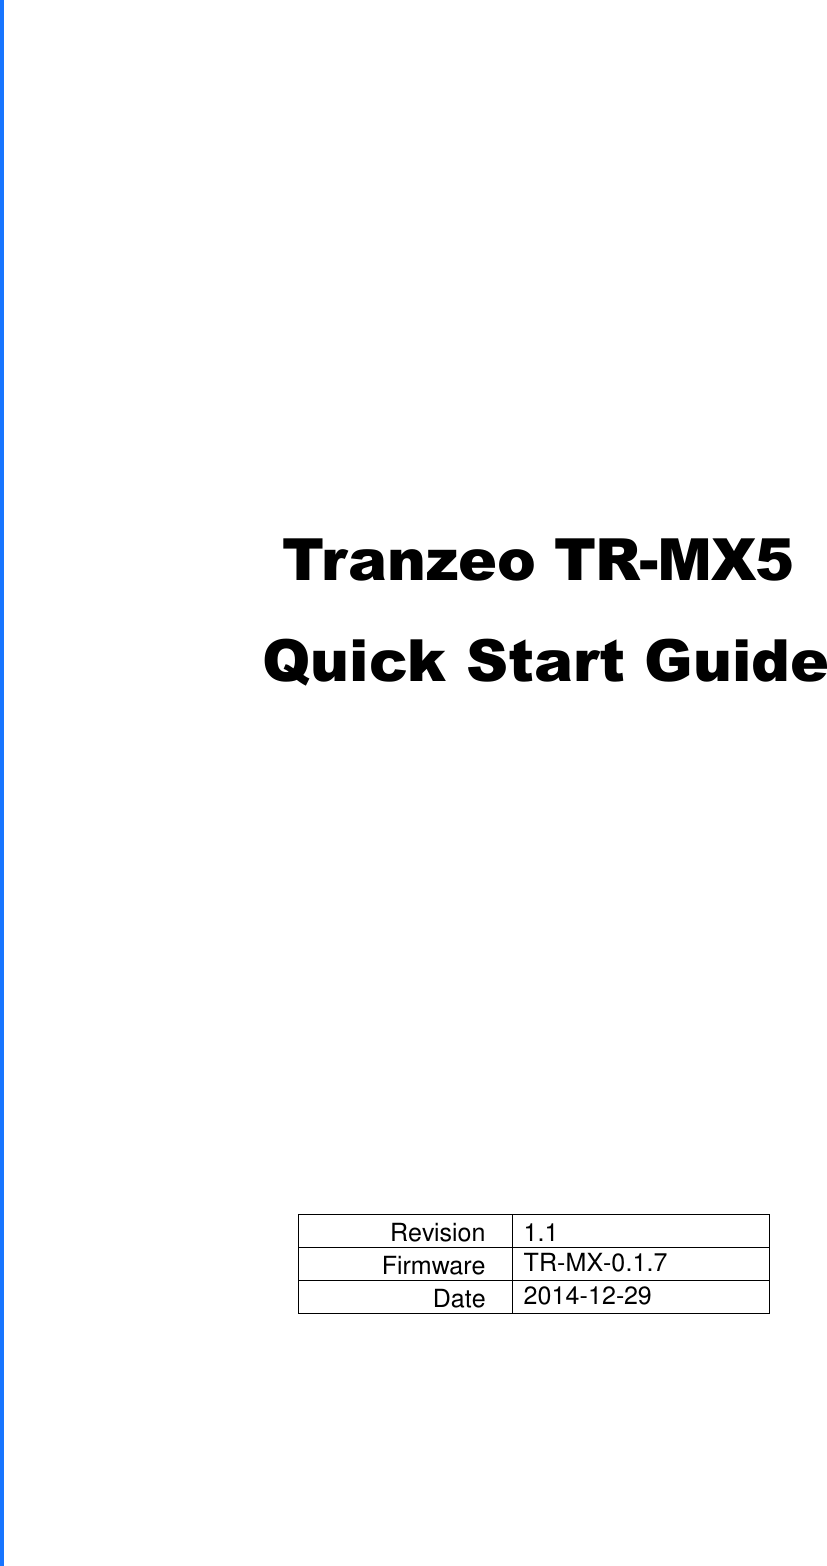 TRANZEO TR-MX50-15 23MX50-15-N 22N2@nMX                                   Tranzeo TR-MX5 Quick Start Guide          Revision 1.1 Firmware TR-MX-0.1.7 Date 2014-12-29 